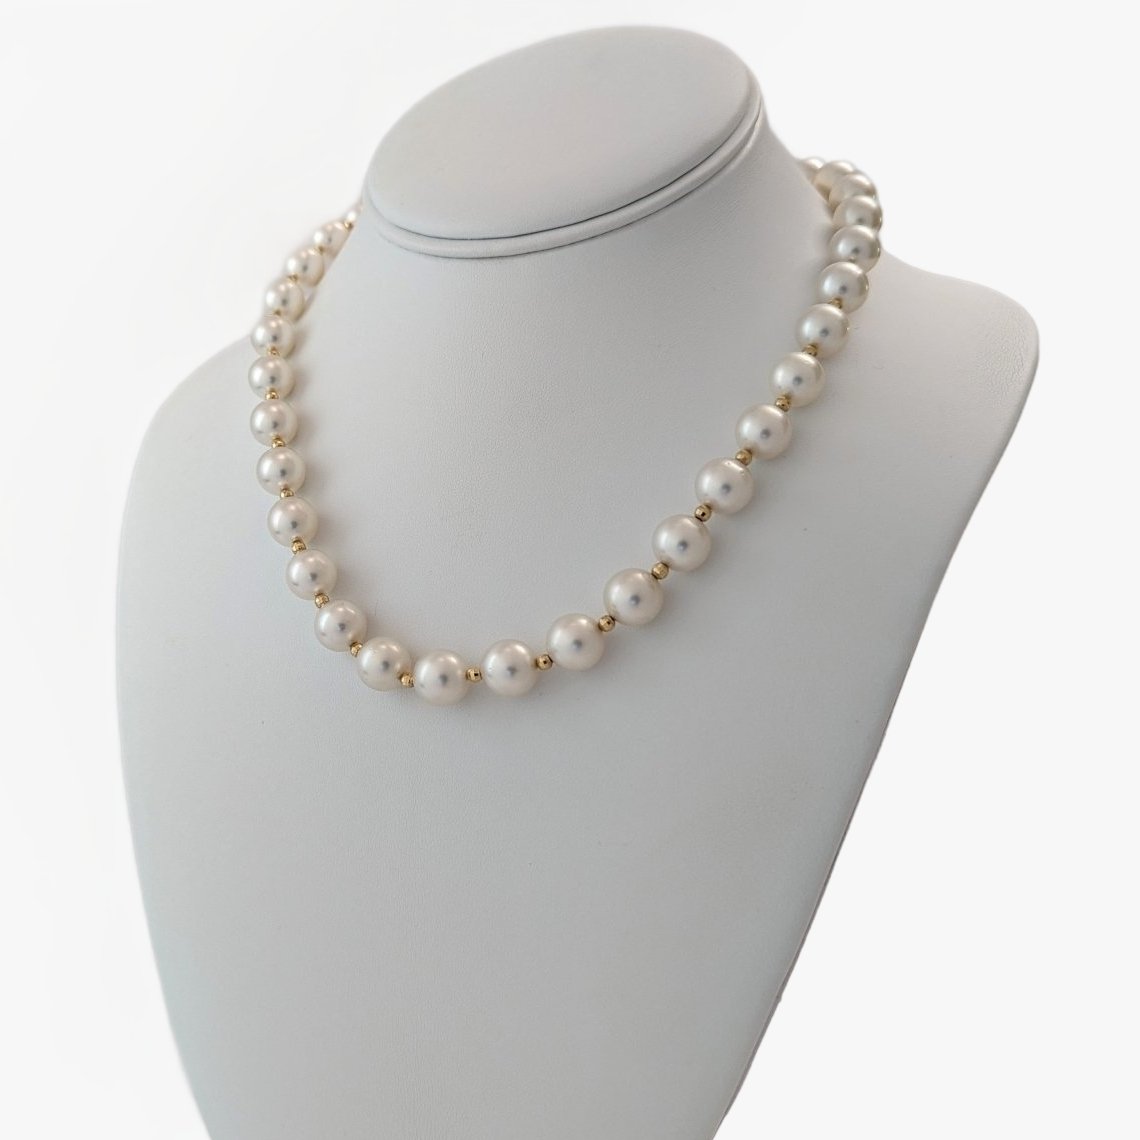 9-11mm White South Sea Pearl Necklace - Marina Korneev Fine Pearls